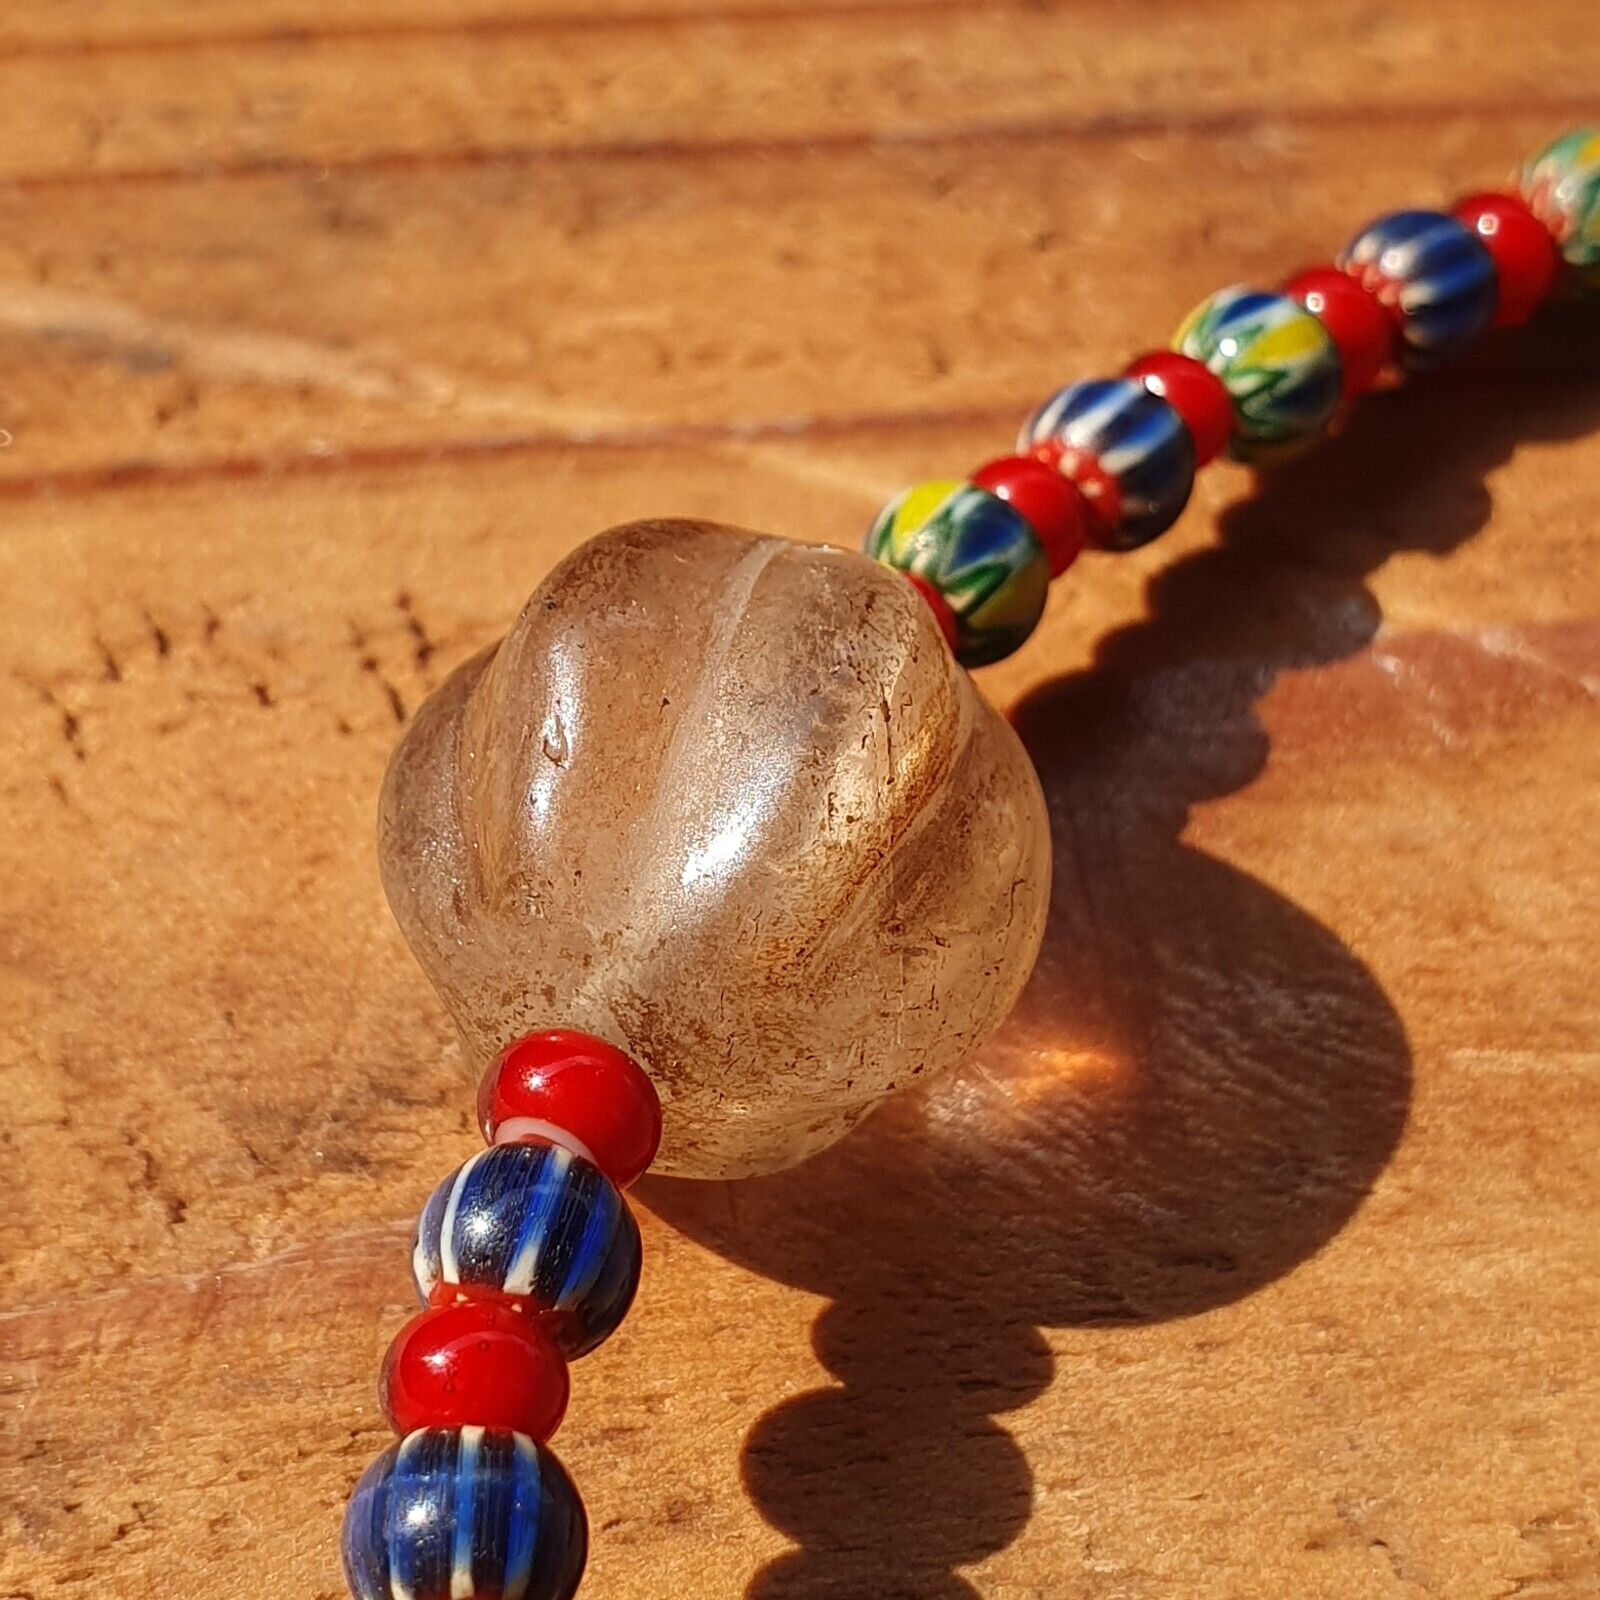 Himalayan Crystals, Chevron & Tibetan Red Agate Dzi Spiritual Amulet necklace